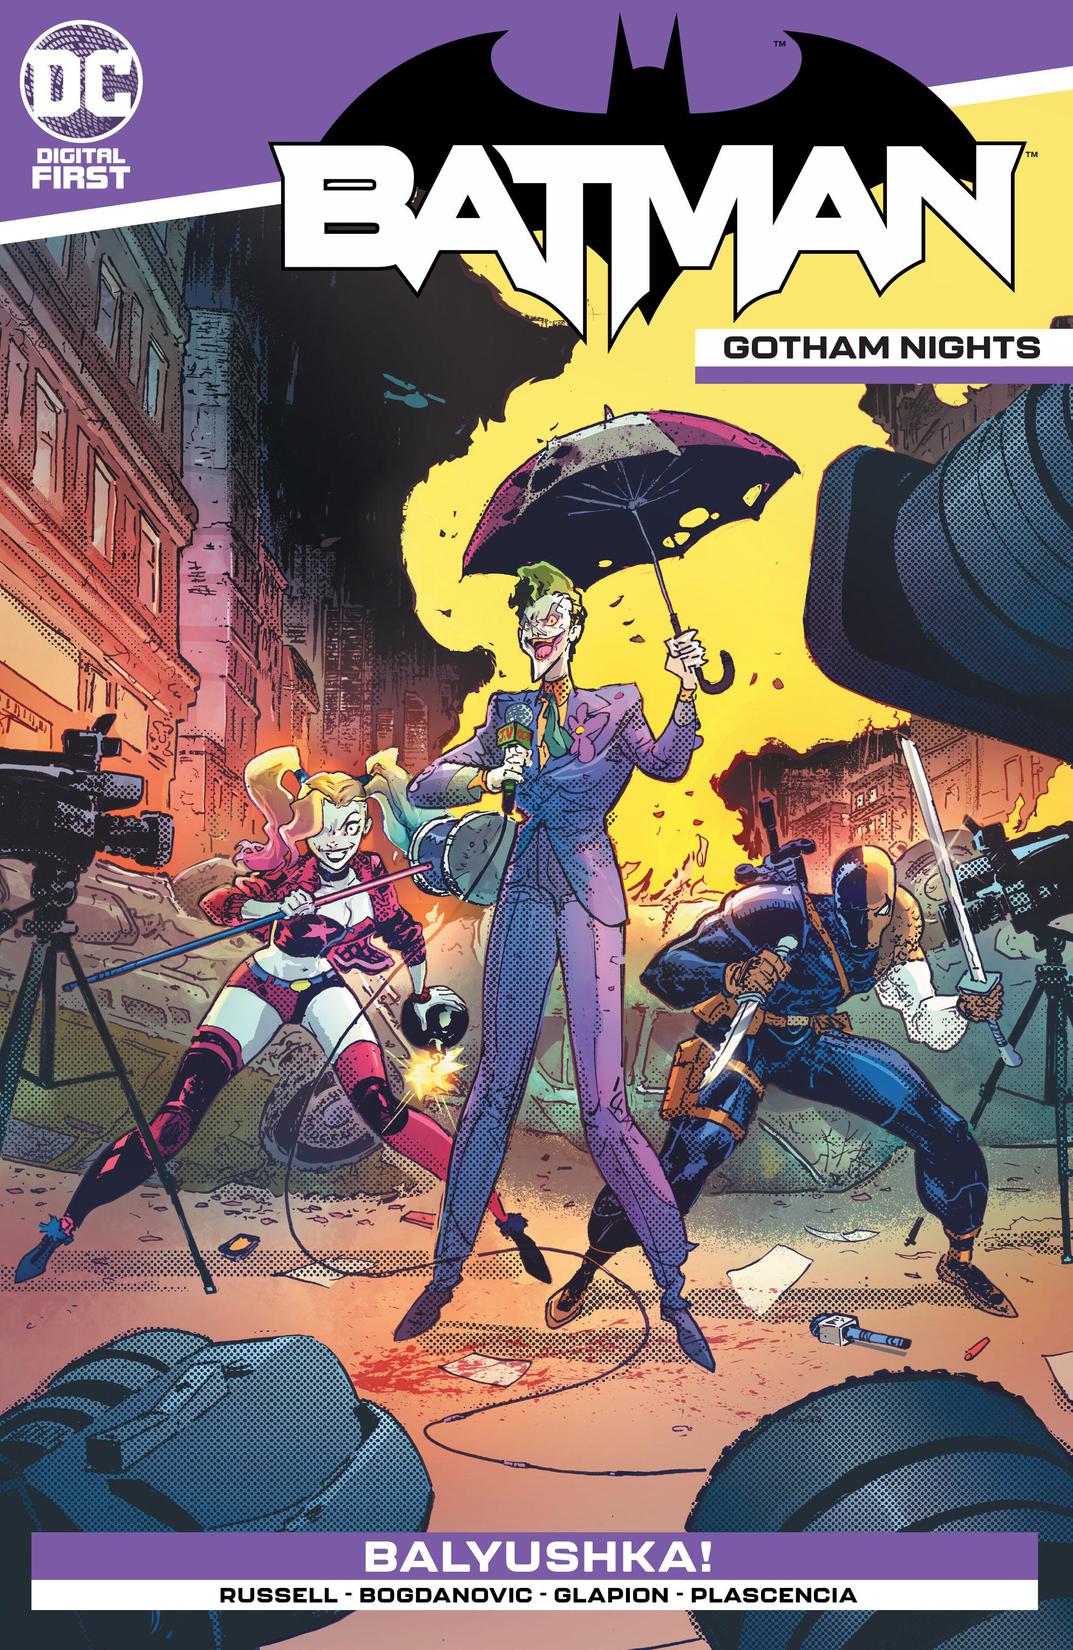 Batman: Gotham Nights #6 preview images